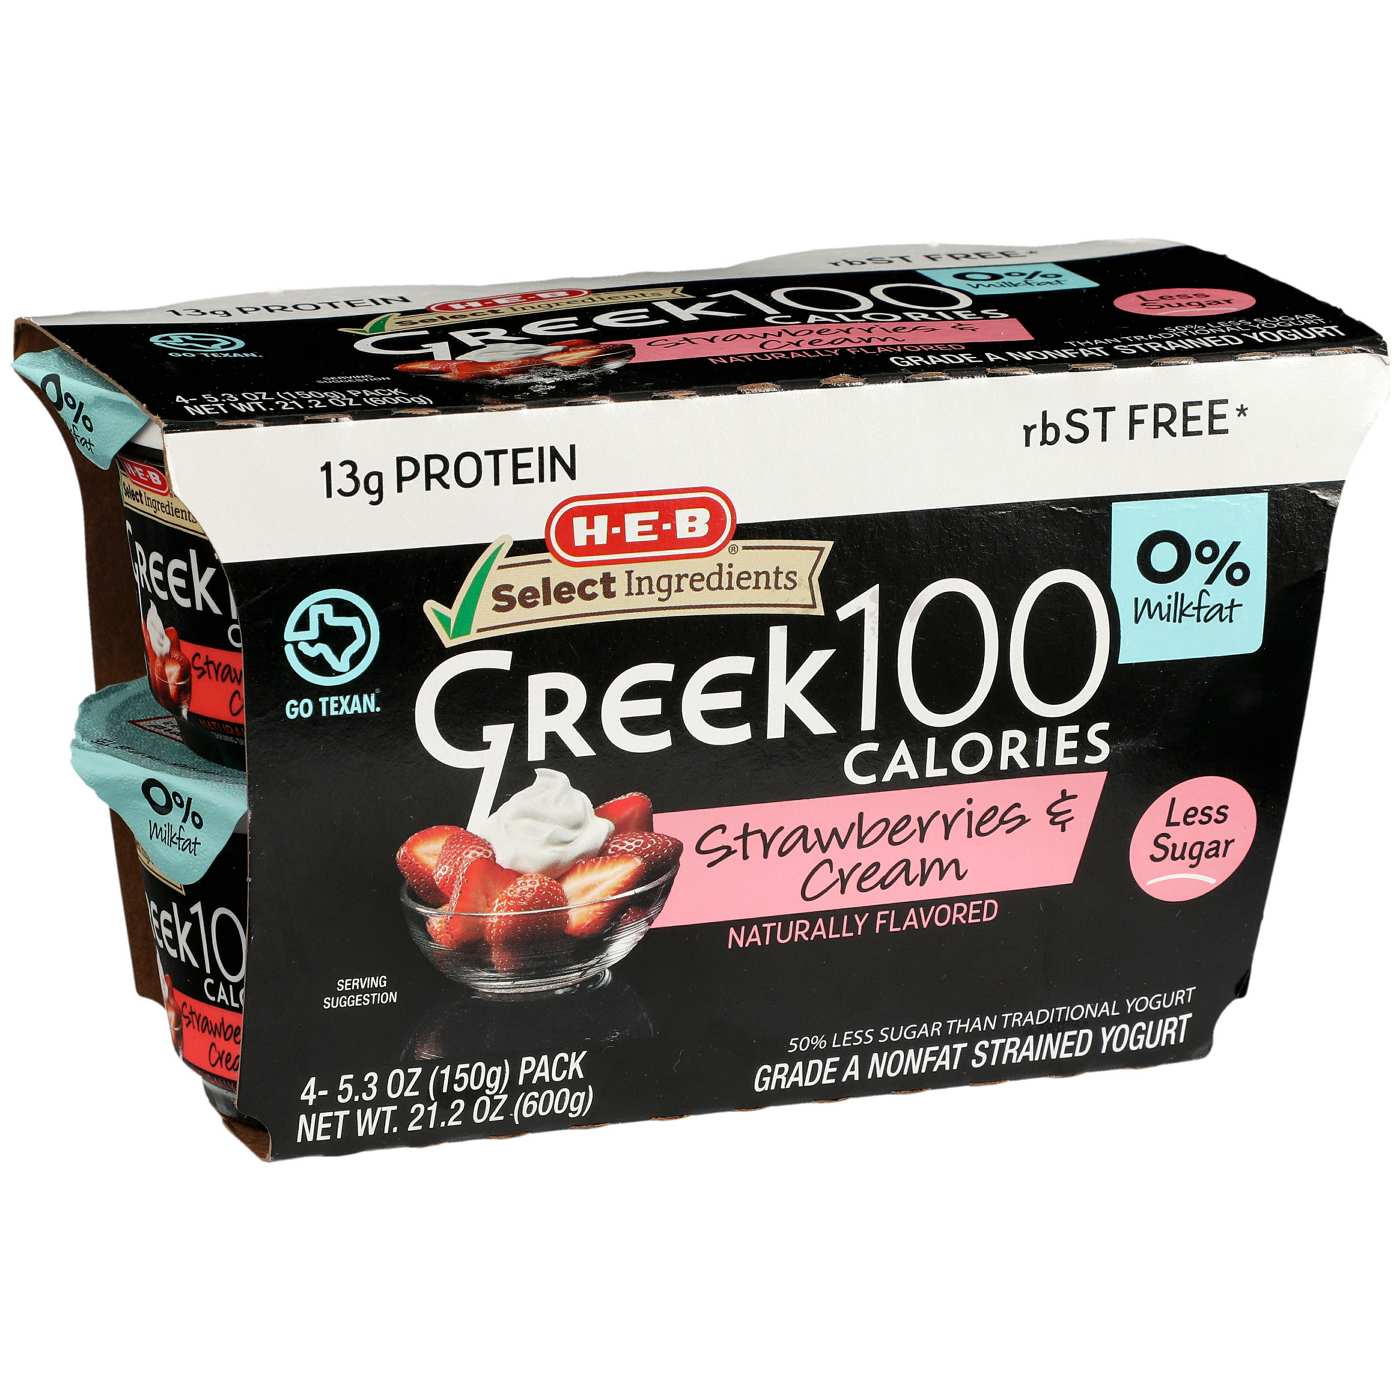 H-E-B Non-Fat 100 Calories Strawberries & Cream Greek Yogurt; image 1 of 2